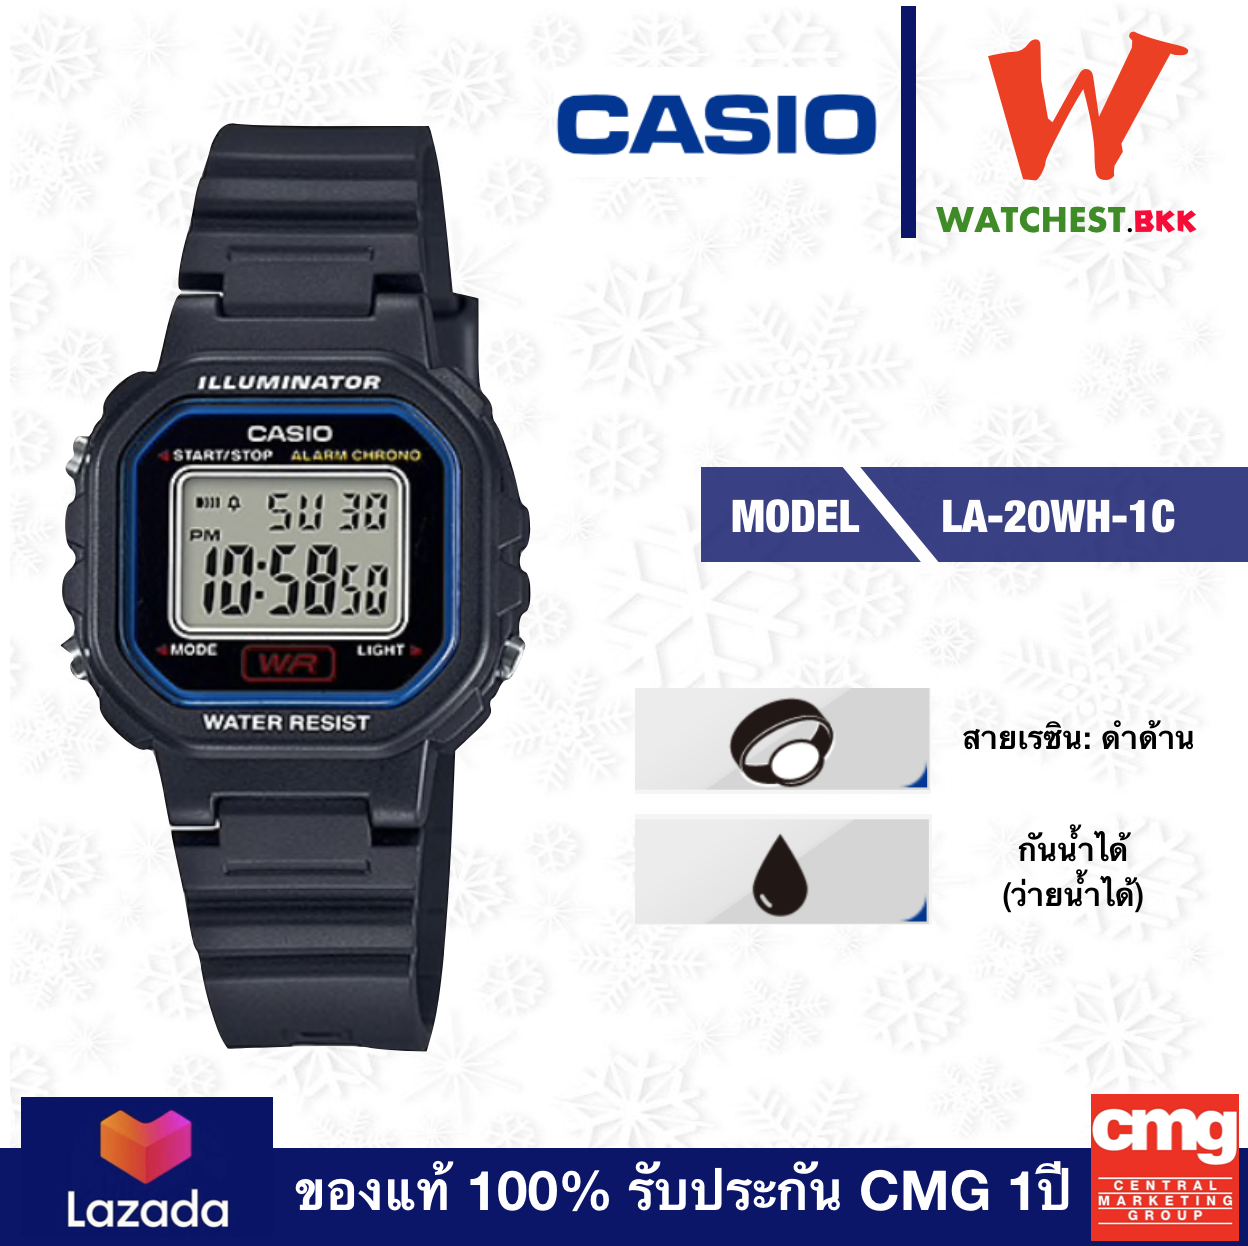 casio นาฬิกาข้อมือเด็ก สายยาง สีดำ กันน้ำได้ 50m รุ่น LA-20WH-1C, คาสิโอ้ สายยาง สีดำ (watchestbkk คาสิโอ แท้ ของแท้100% ประกัน CMG)